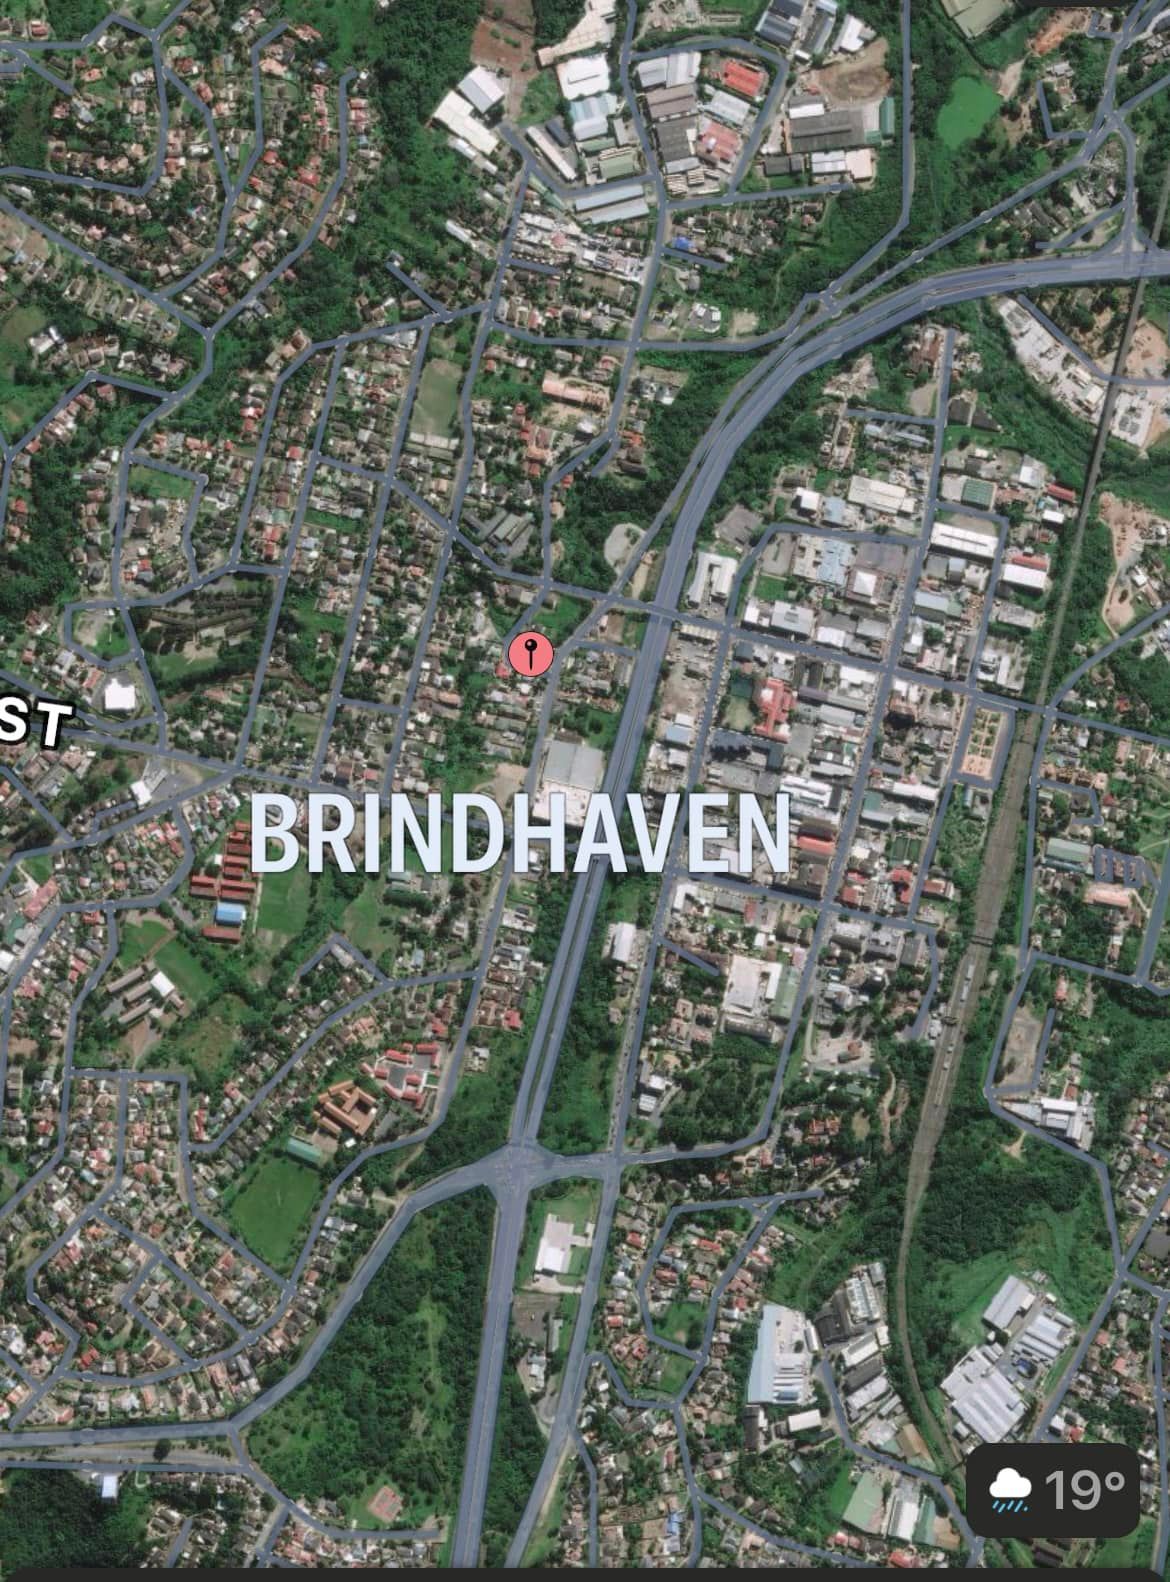 Unconfirmed hijacking in Brindhaven